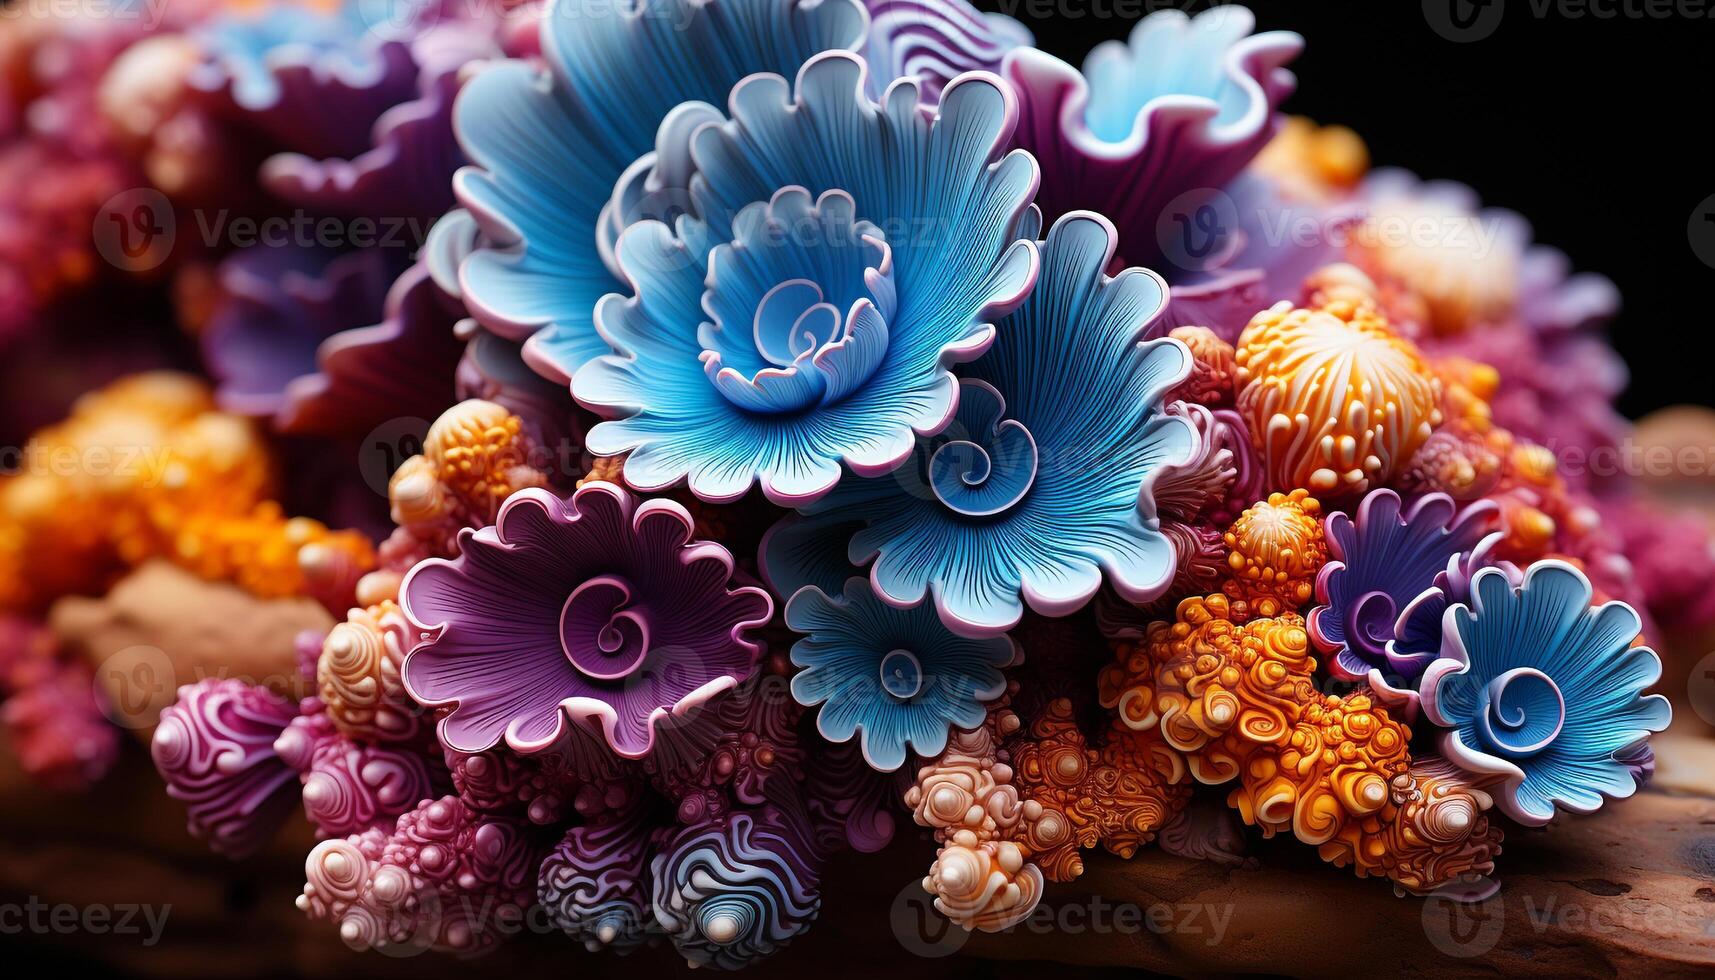 ai gegenereerd onderwater- vis in multi gekleurde koraal rif gegenereerd door ai foto